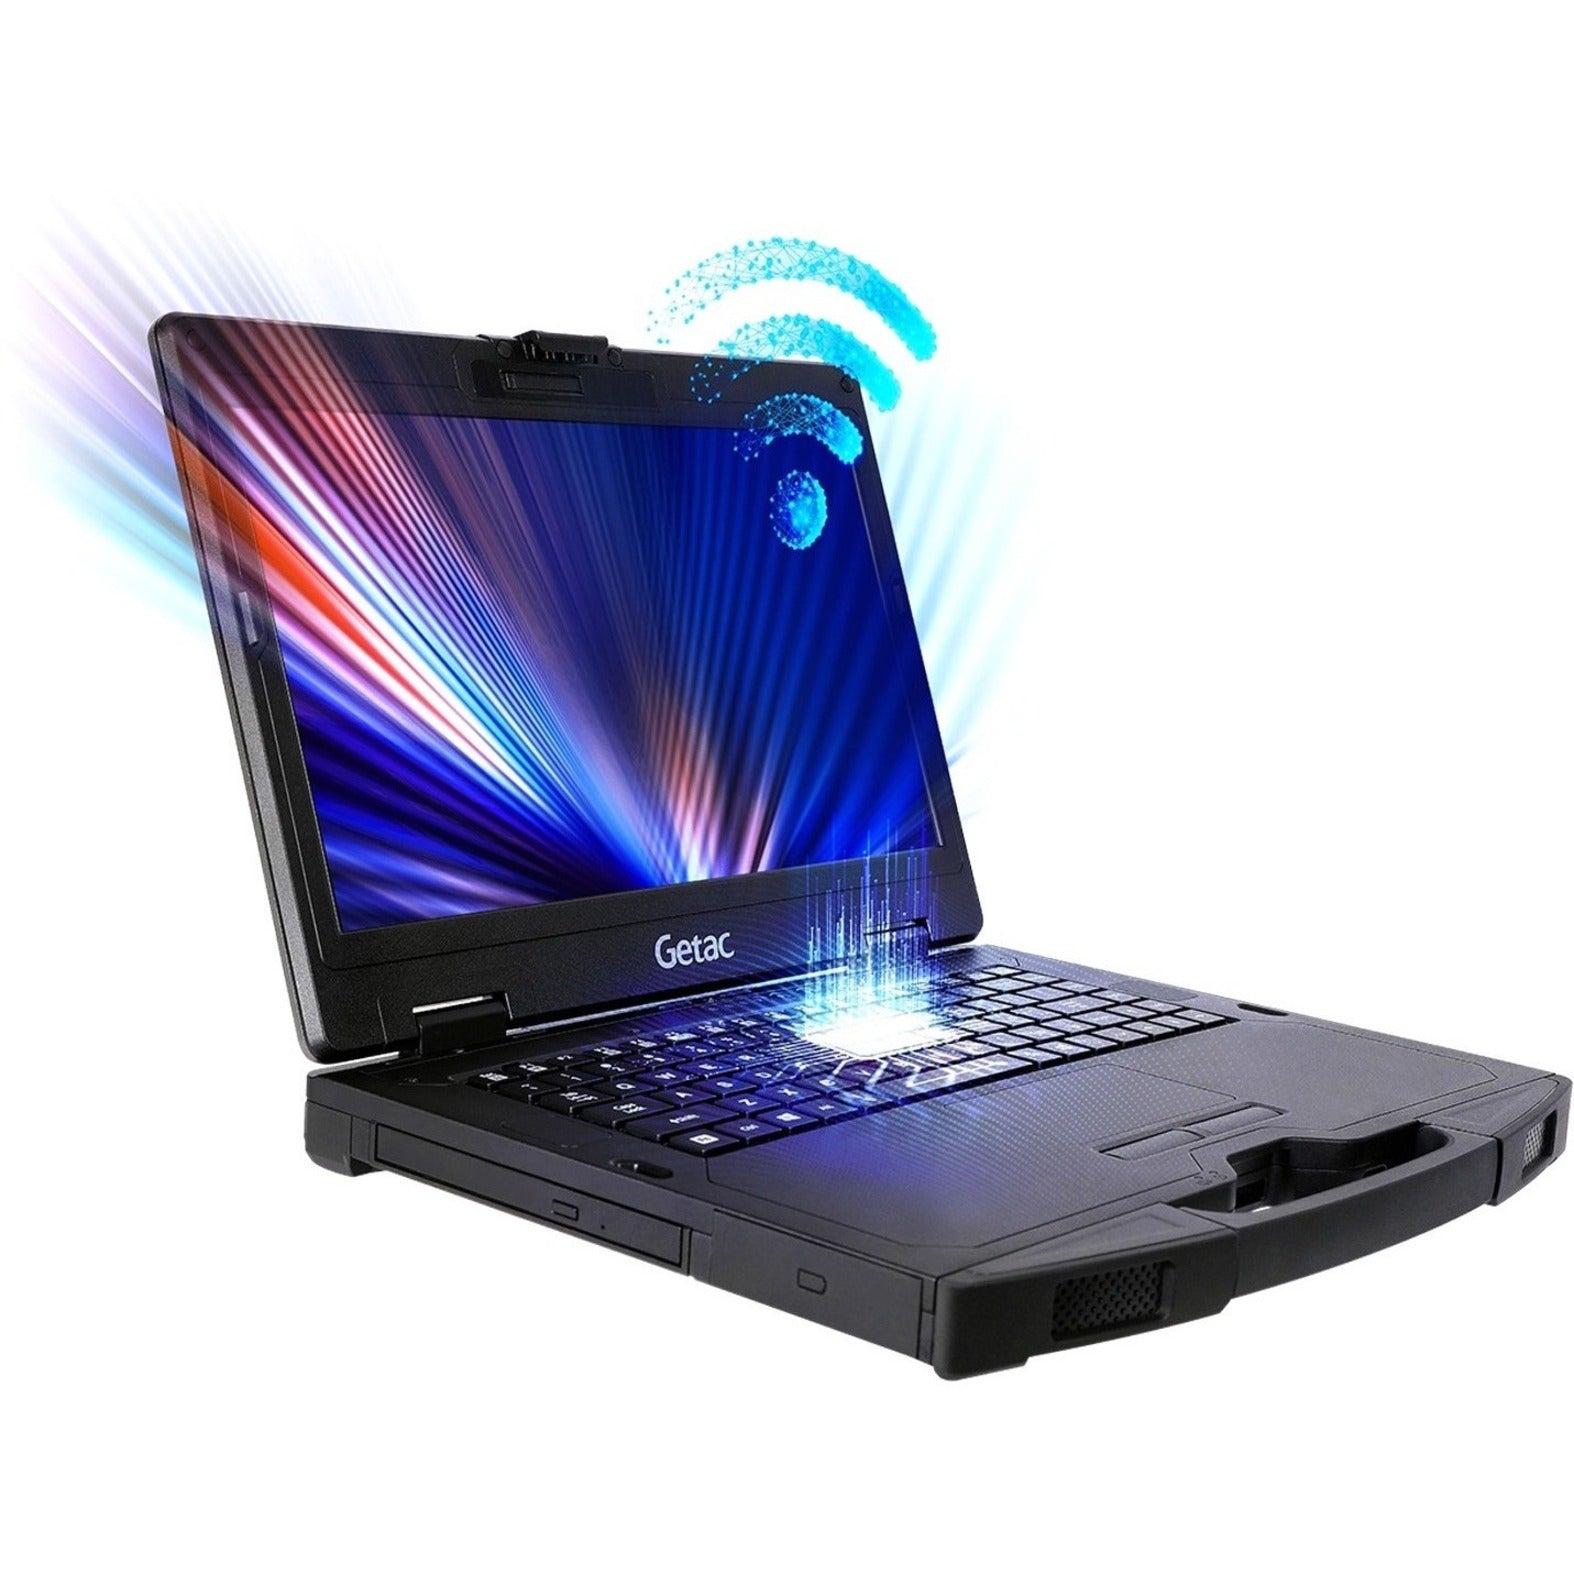 Getac SP2N5ACASDXX S410 G4 Notebook, Intel Core i5 1135G7 Processor, 8GB RAM, 256GB SSD, Windows 11 Pro